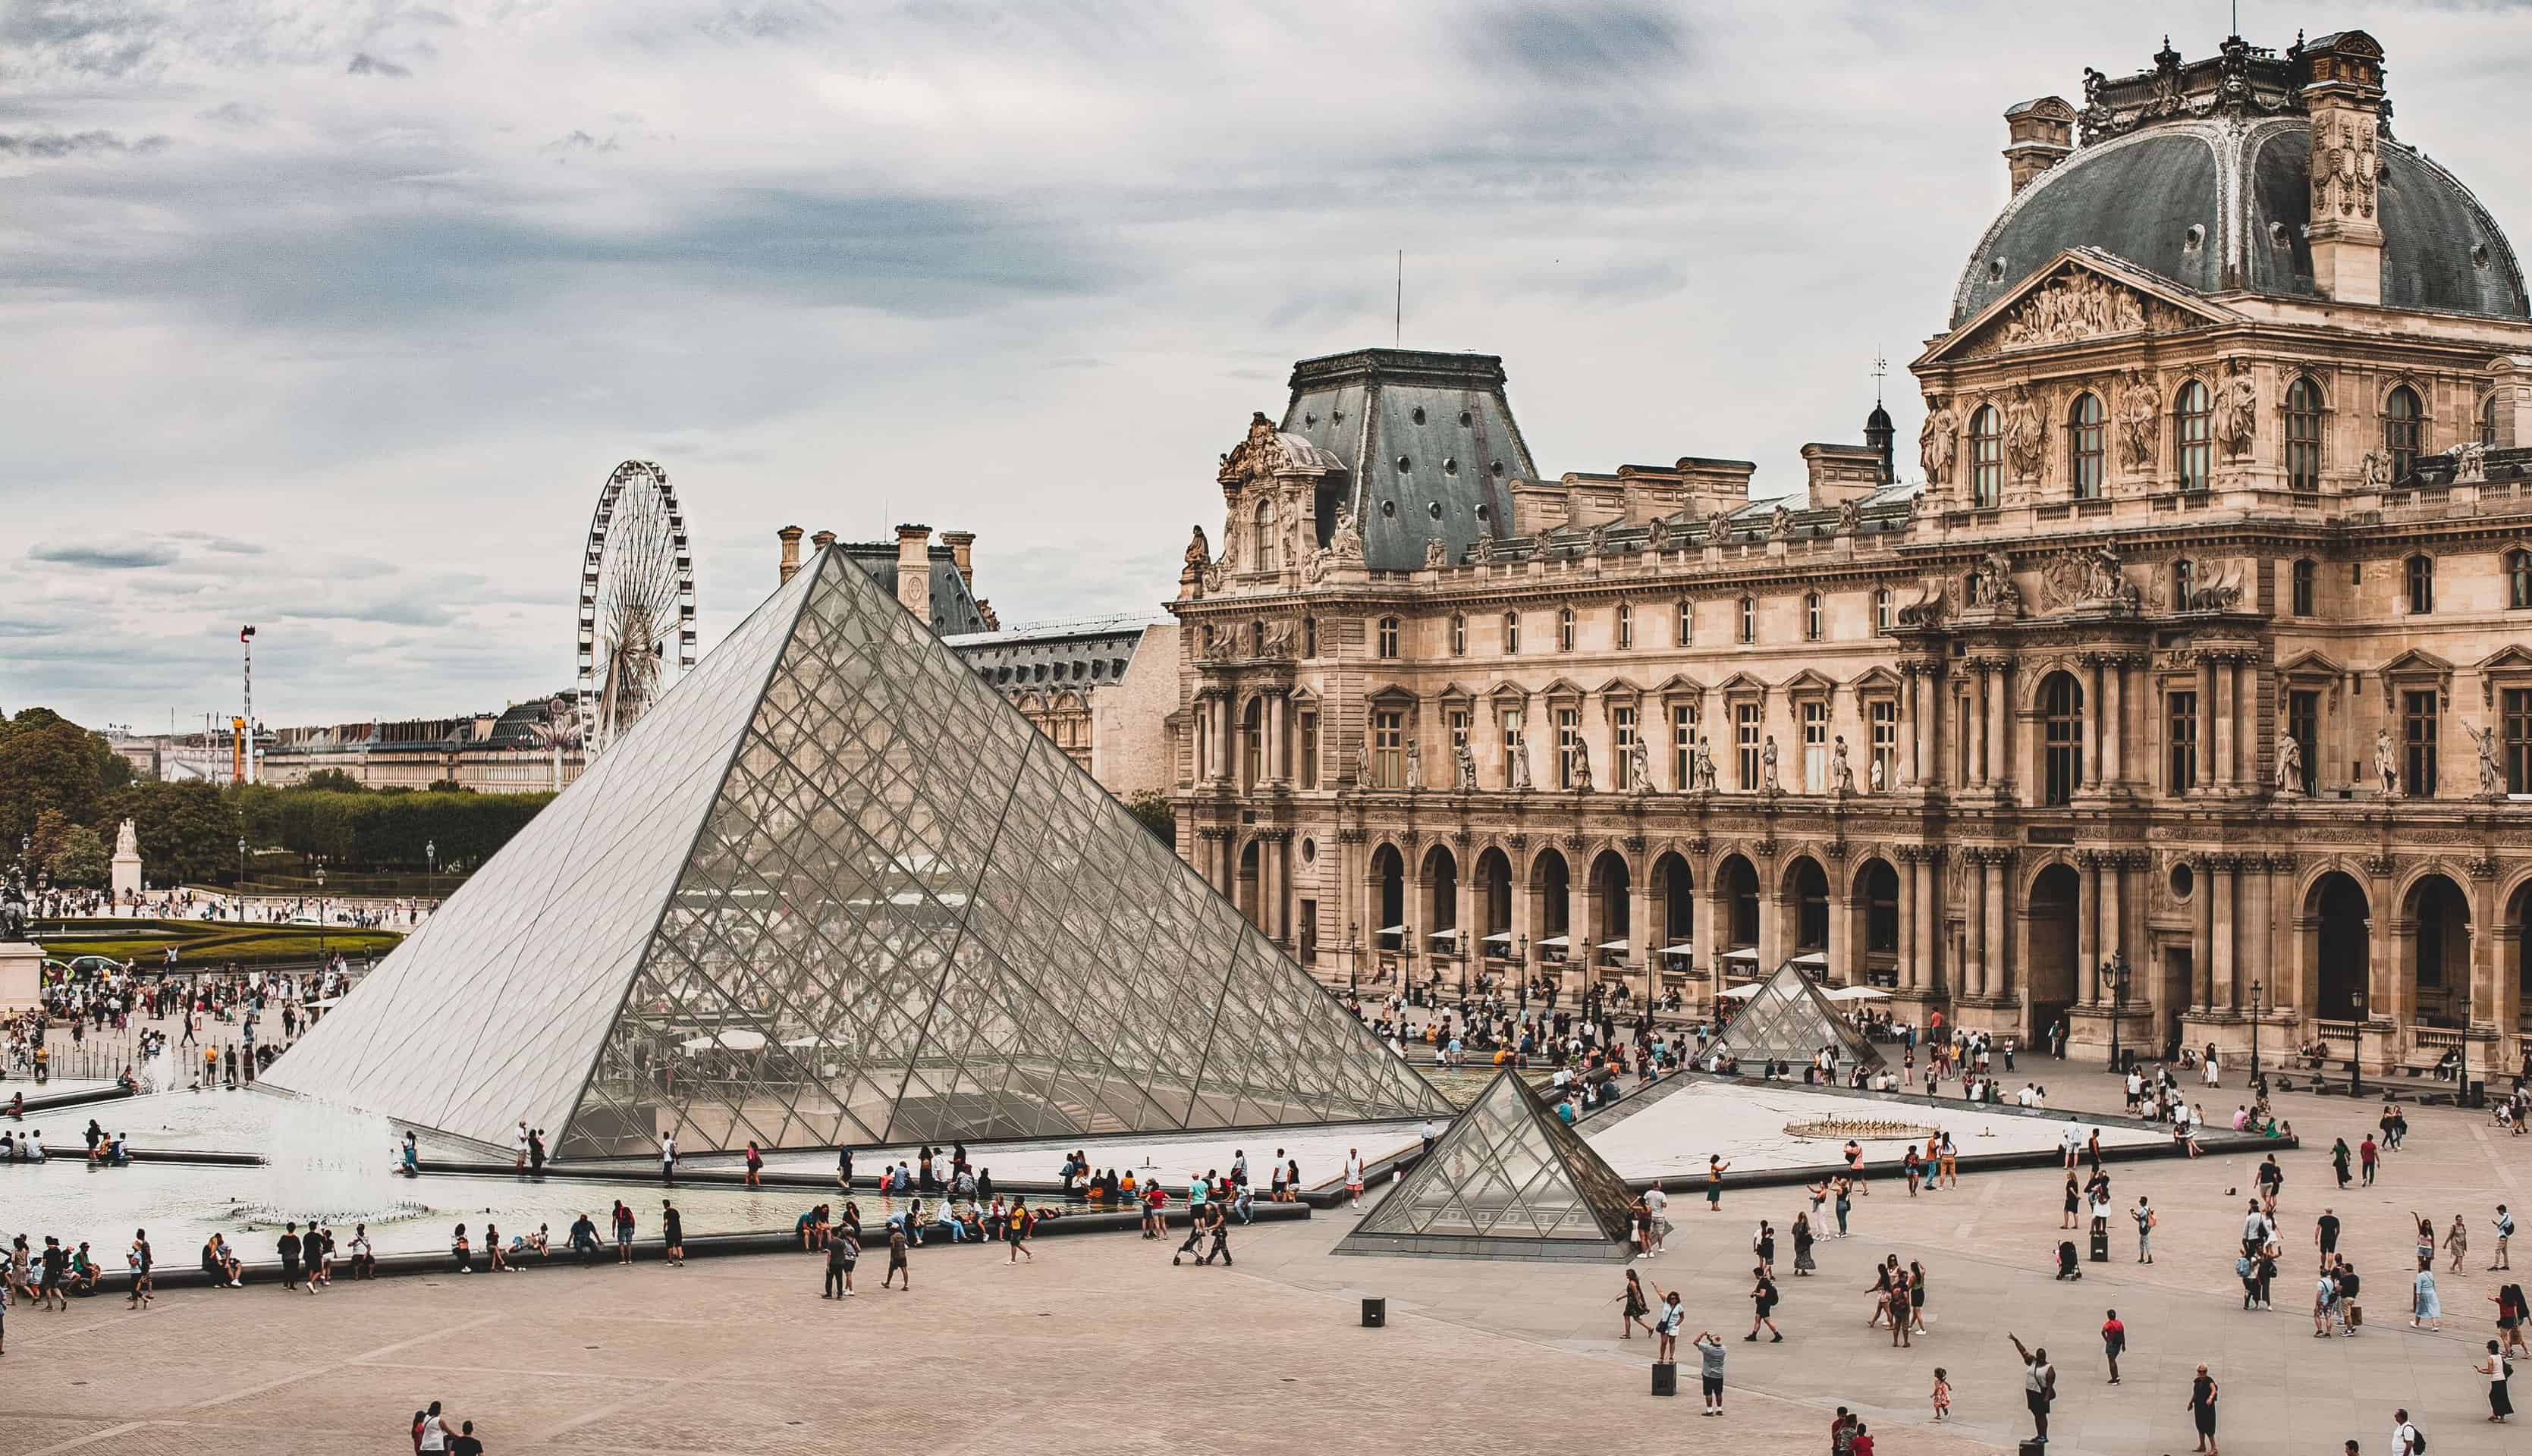 Louvre Museum / Opéra